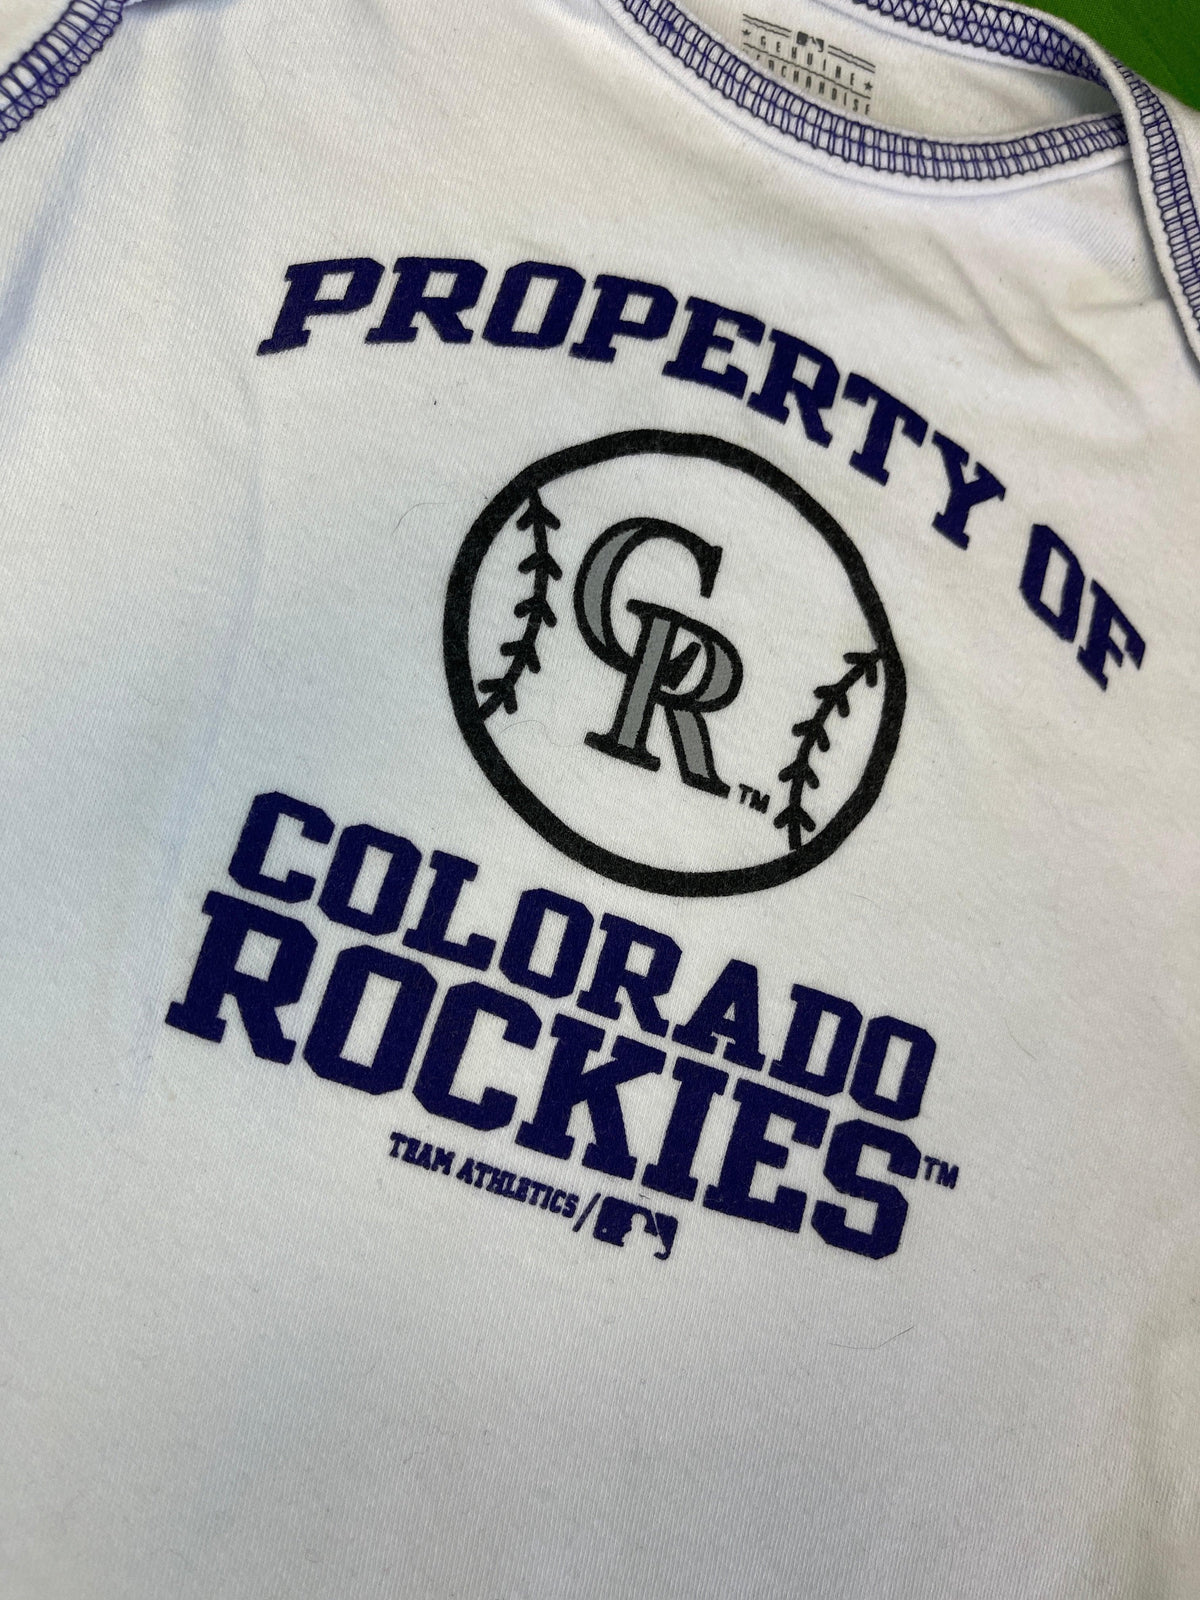 MLB Colorado Rockies White Bodysuit 0-3 months